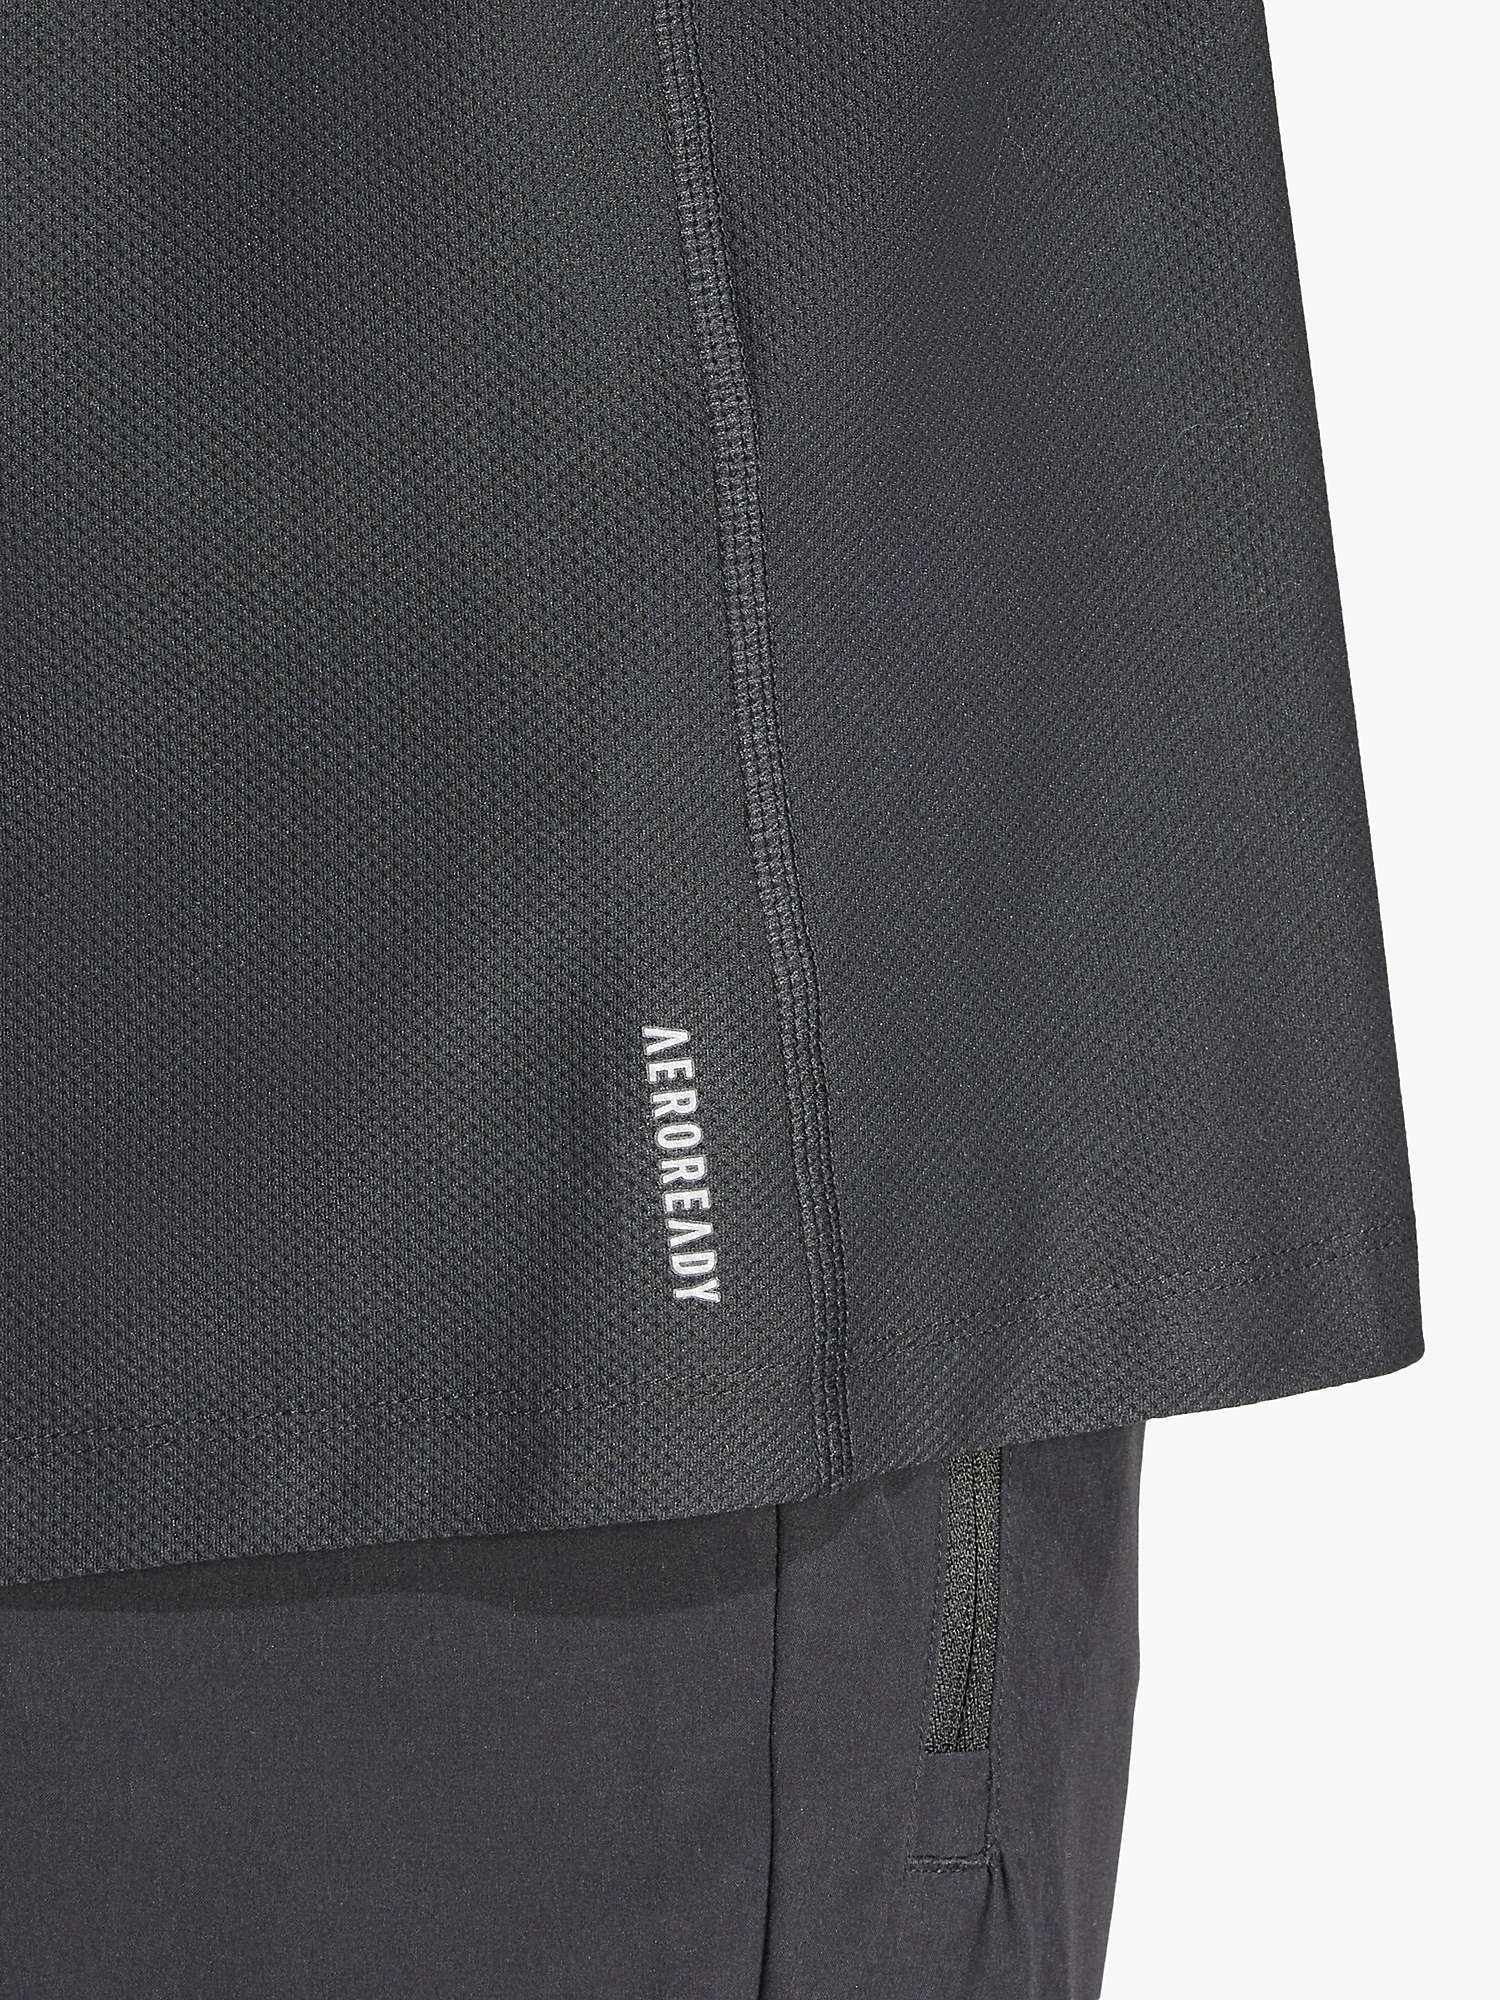 Buy adidas Own The Run Short Sleeve Running Top, Black Online at johnlewis.com